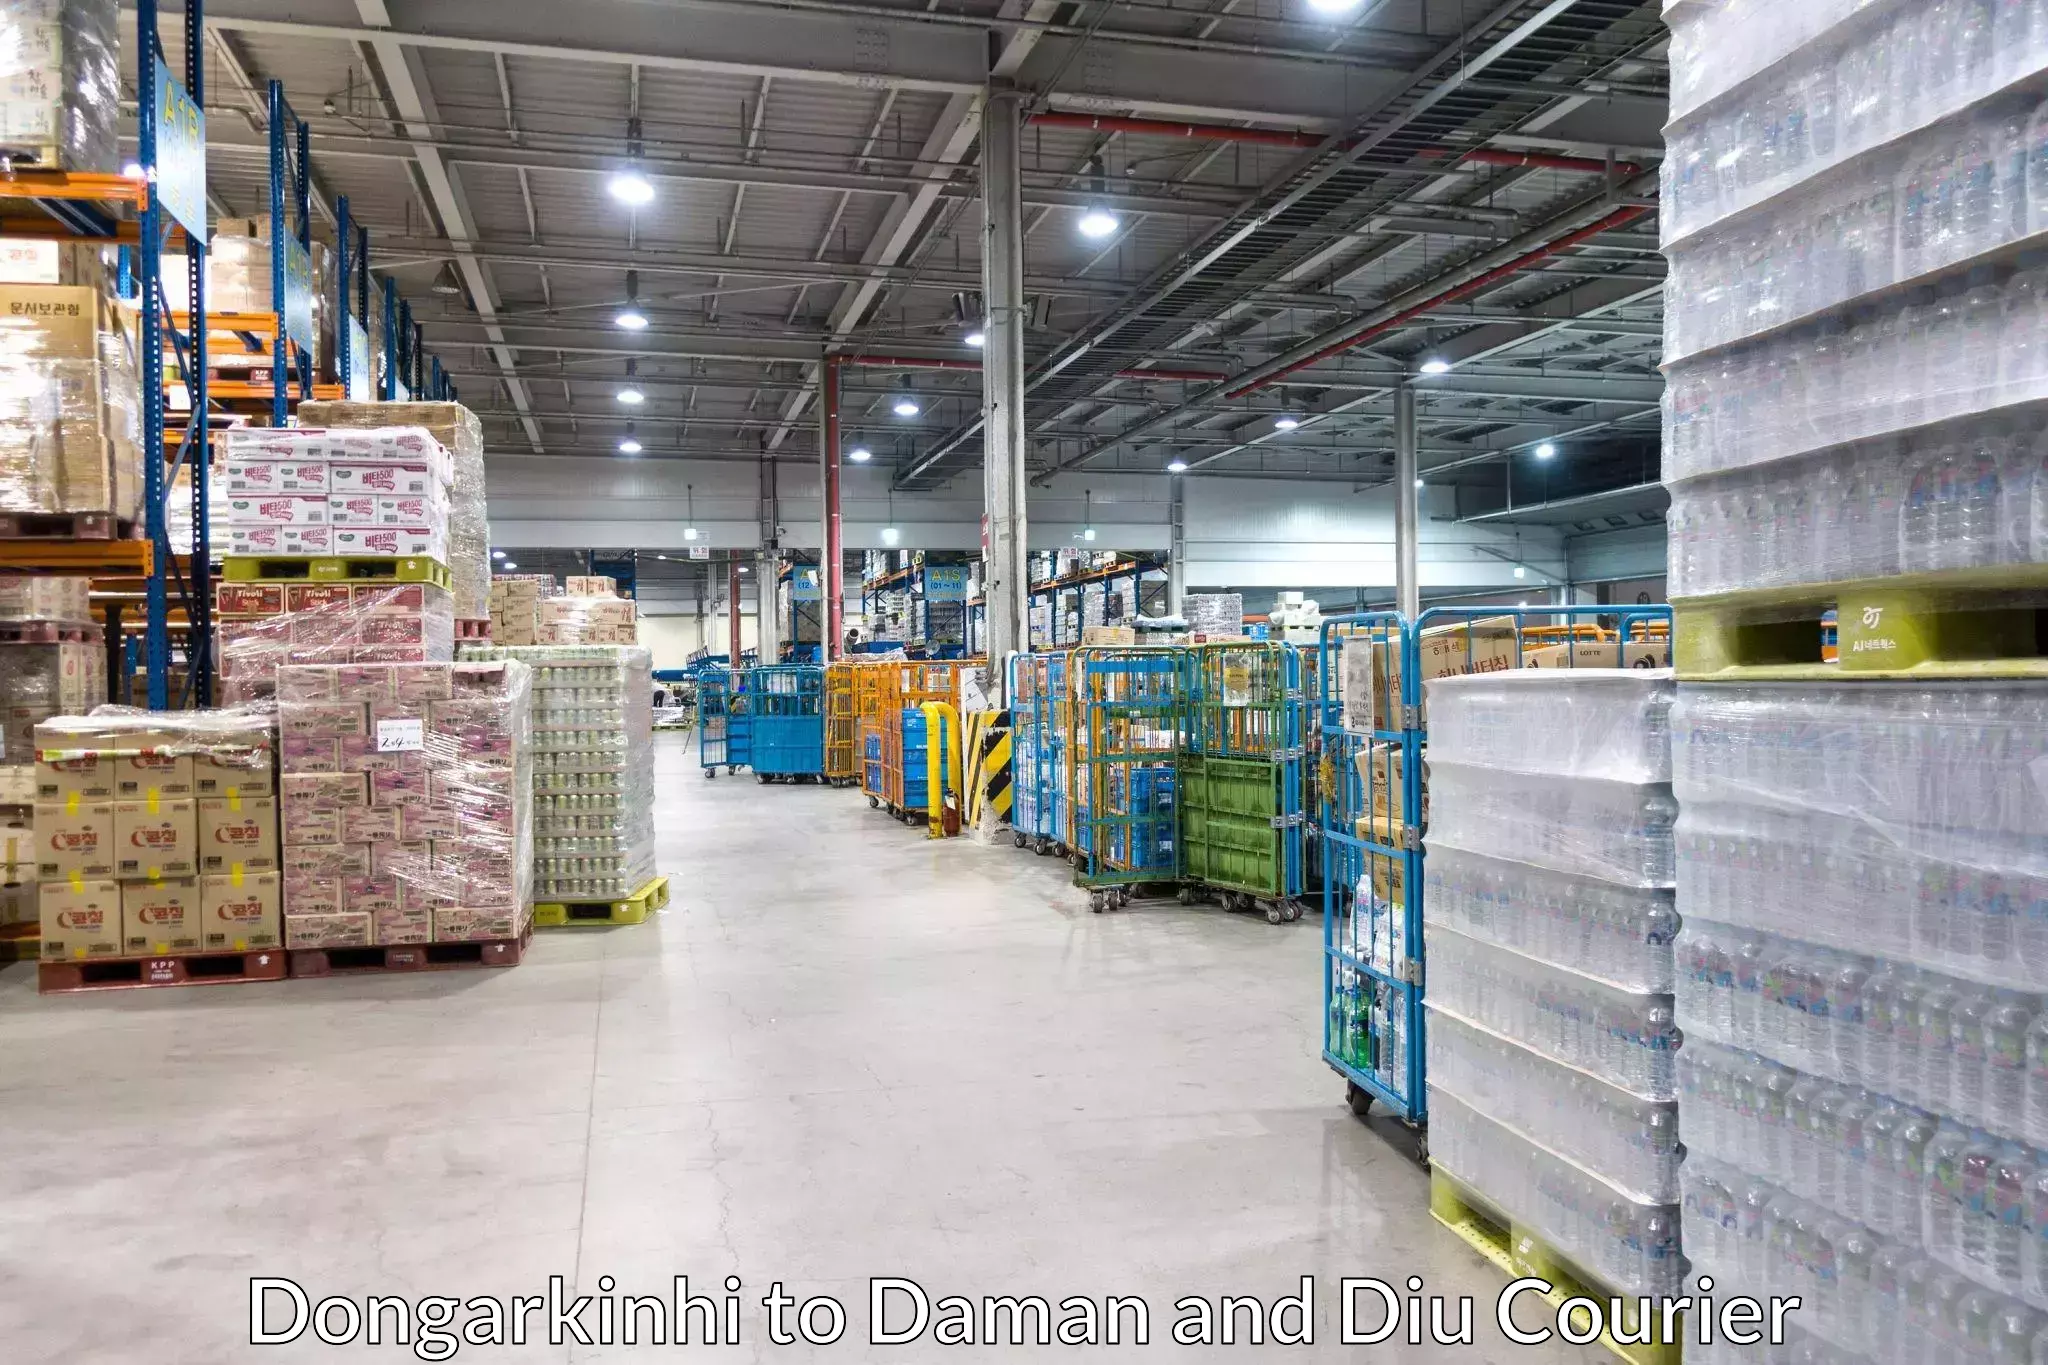 Reliable logistics providers Dongarkinhi to Daman